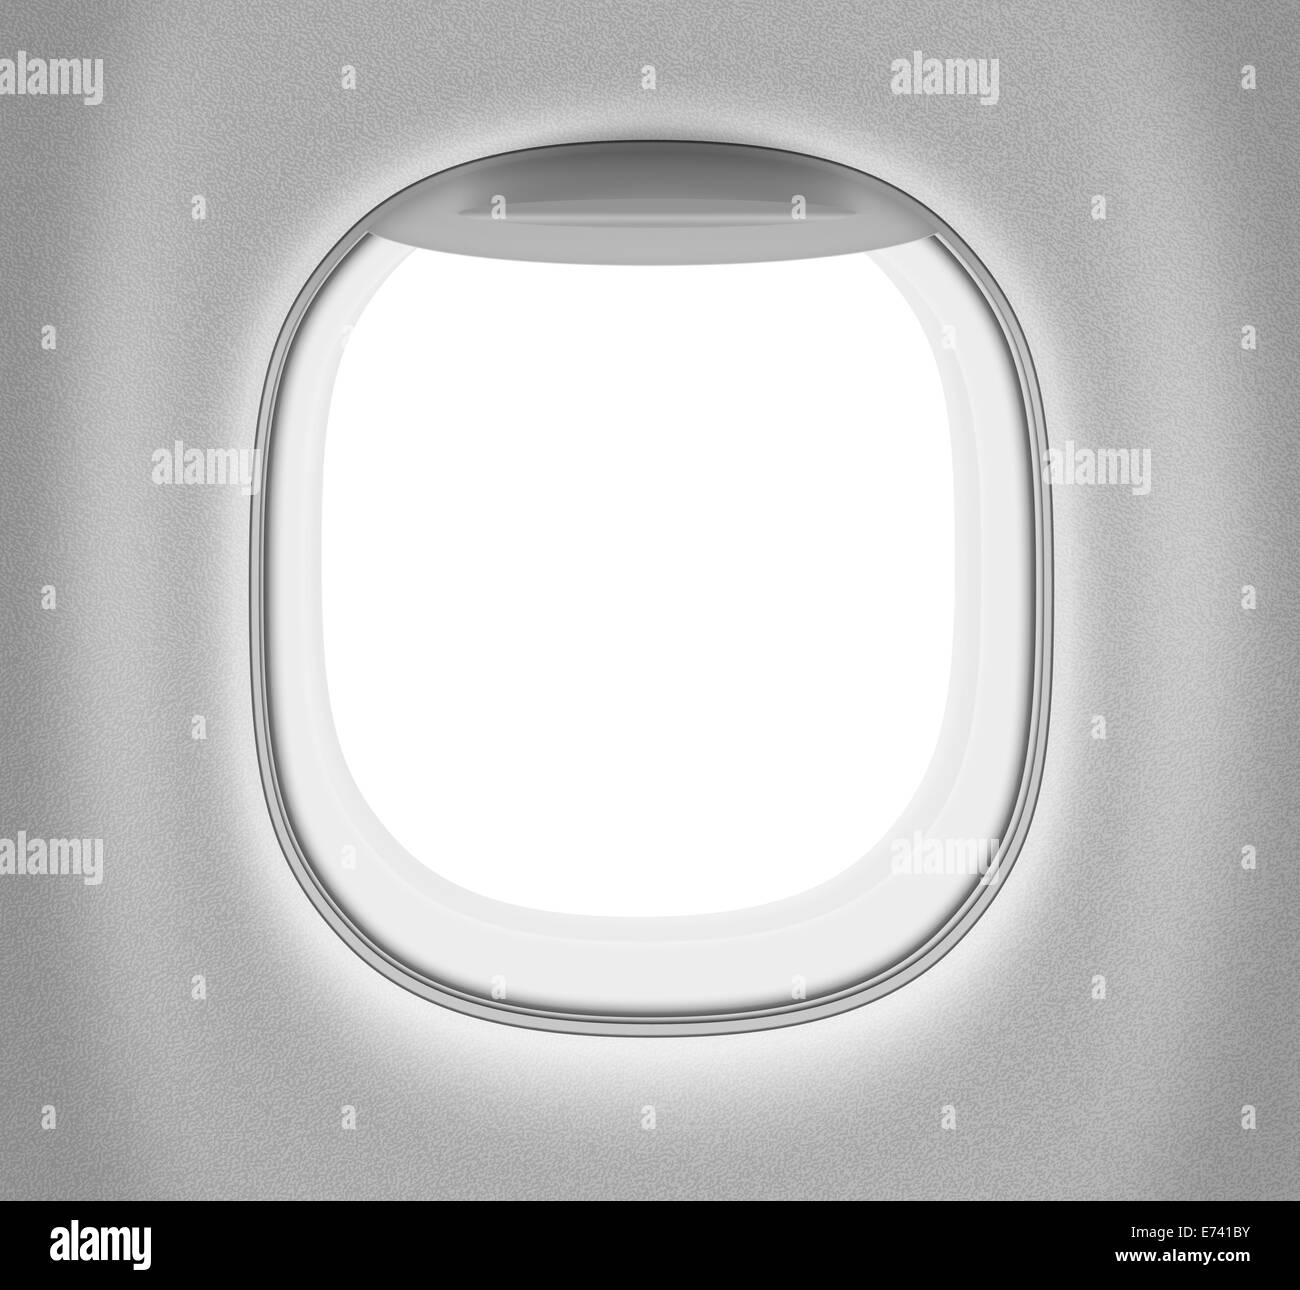 Aeroplane or jet black and white window Stock Photo